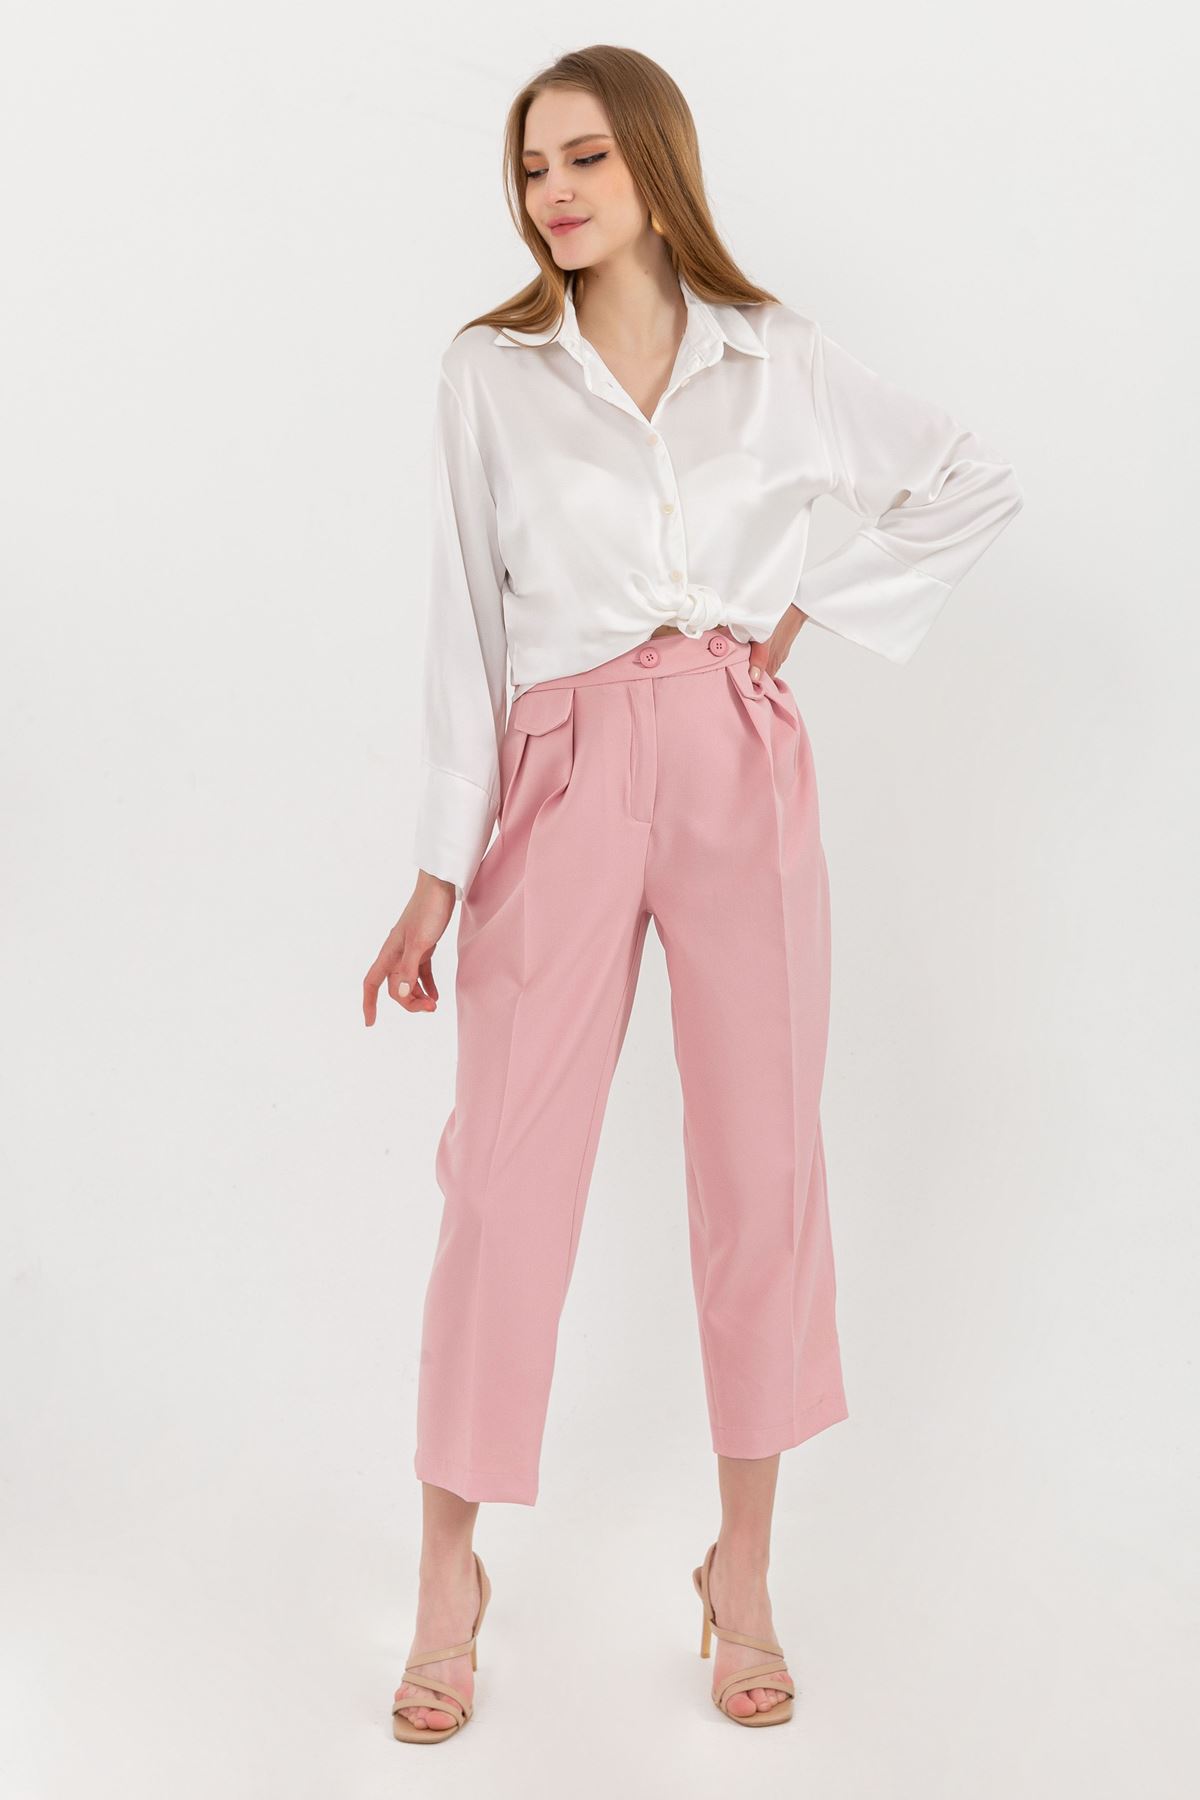 Atlas Fabric Ankle Length Carrot Style Women Trouser-Light Pink